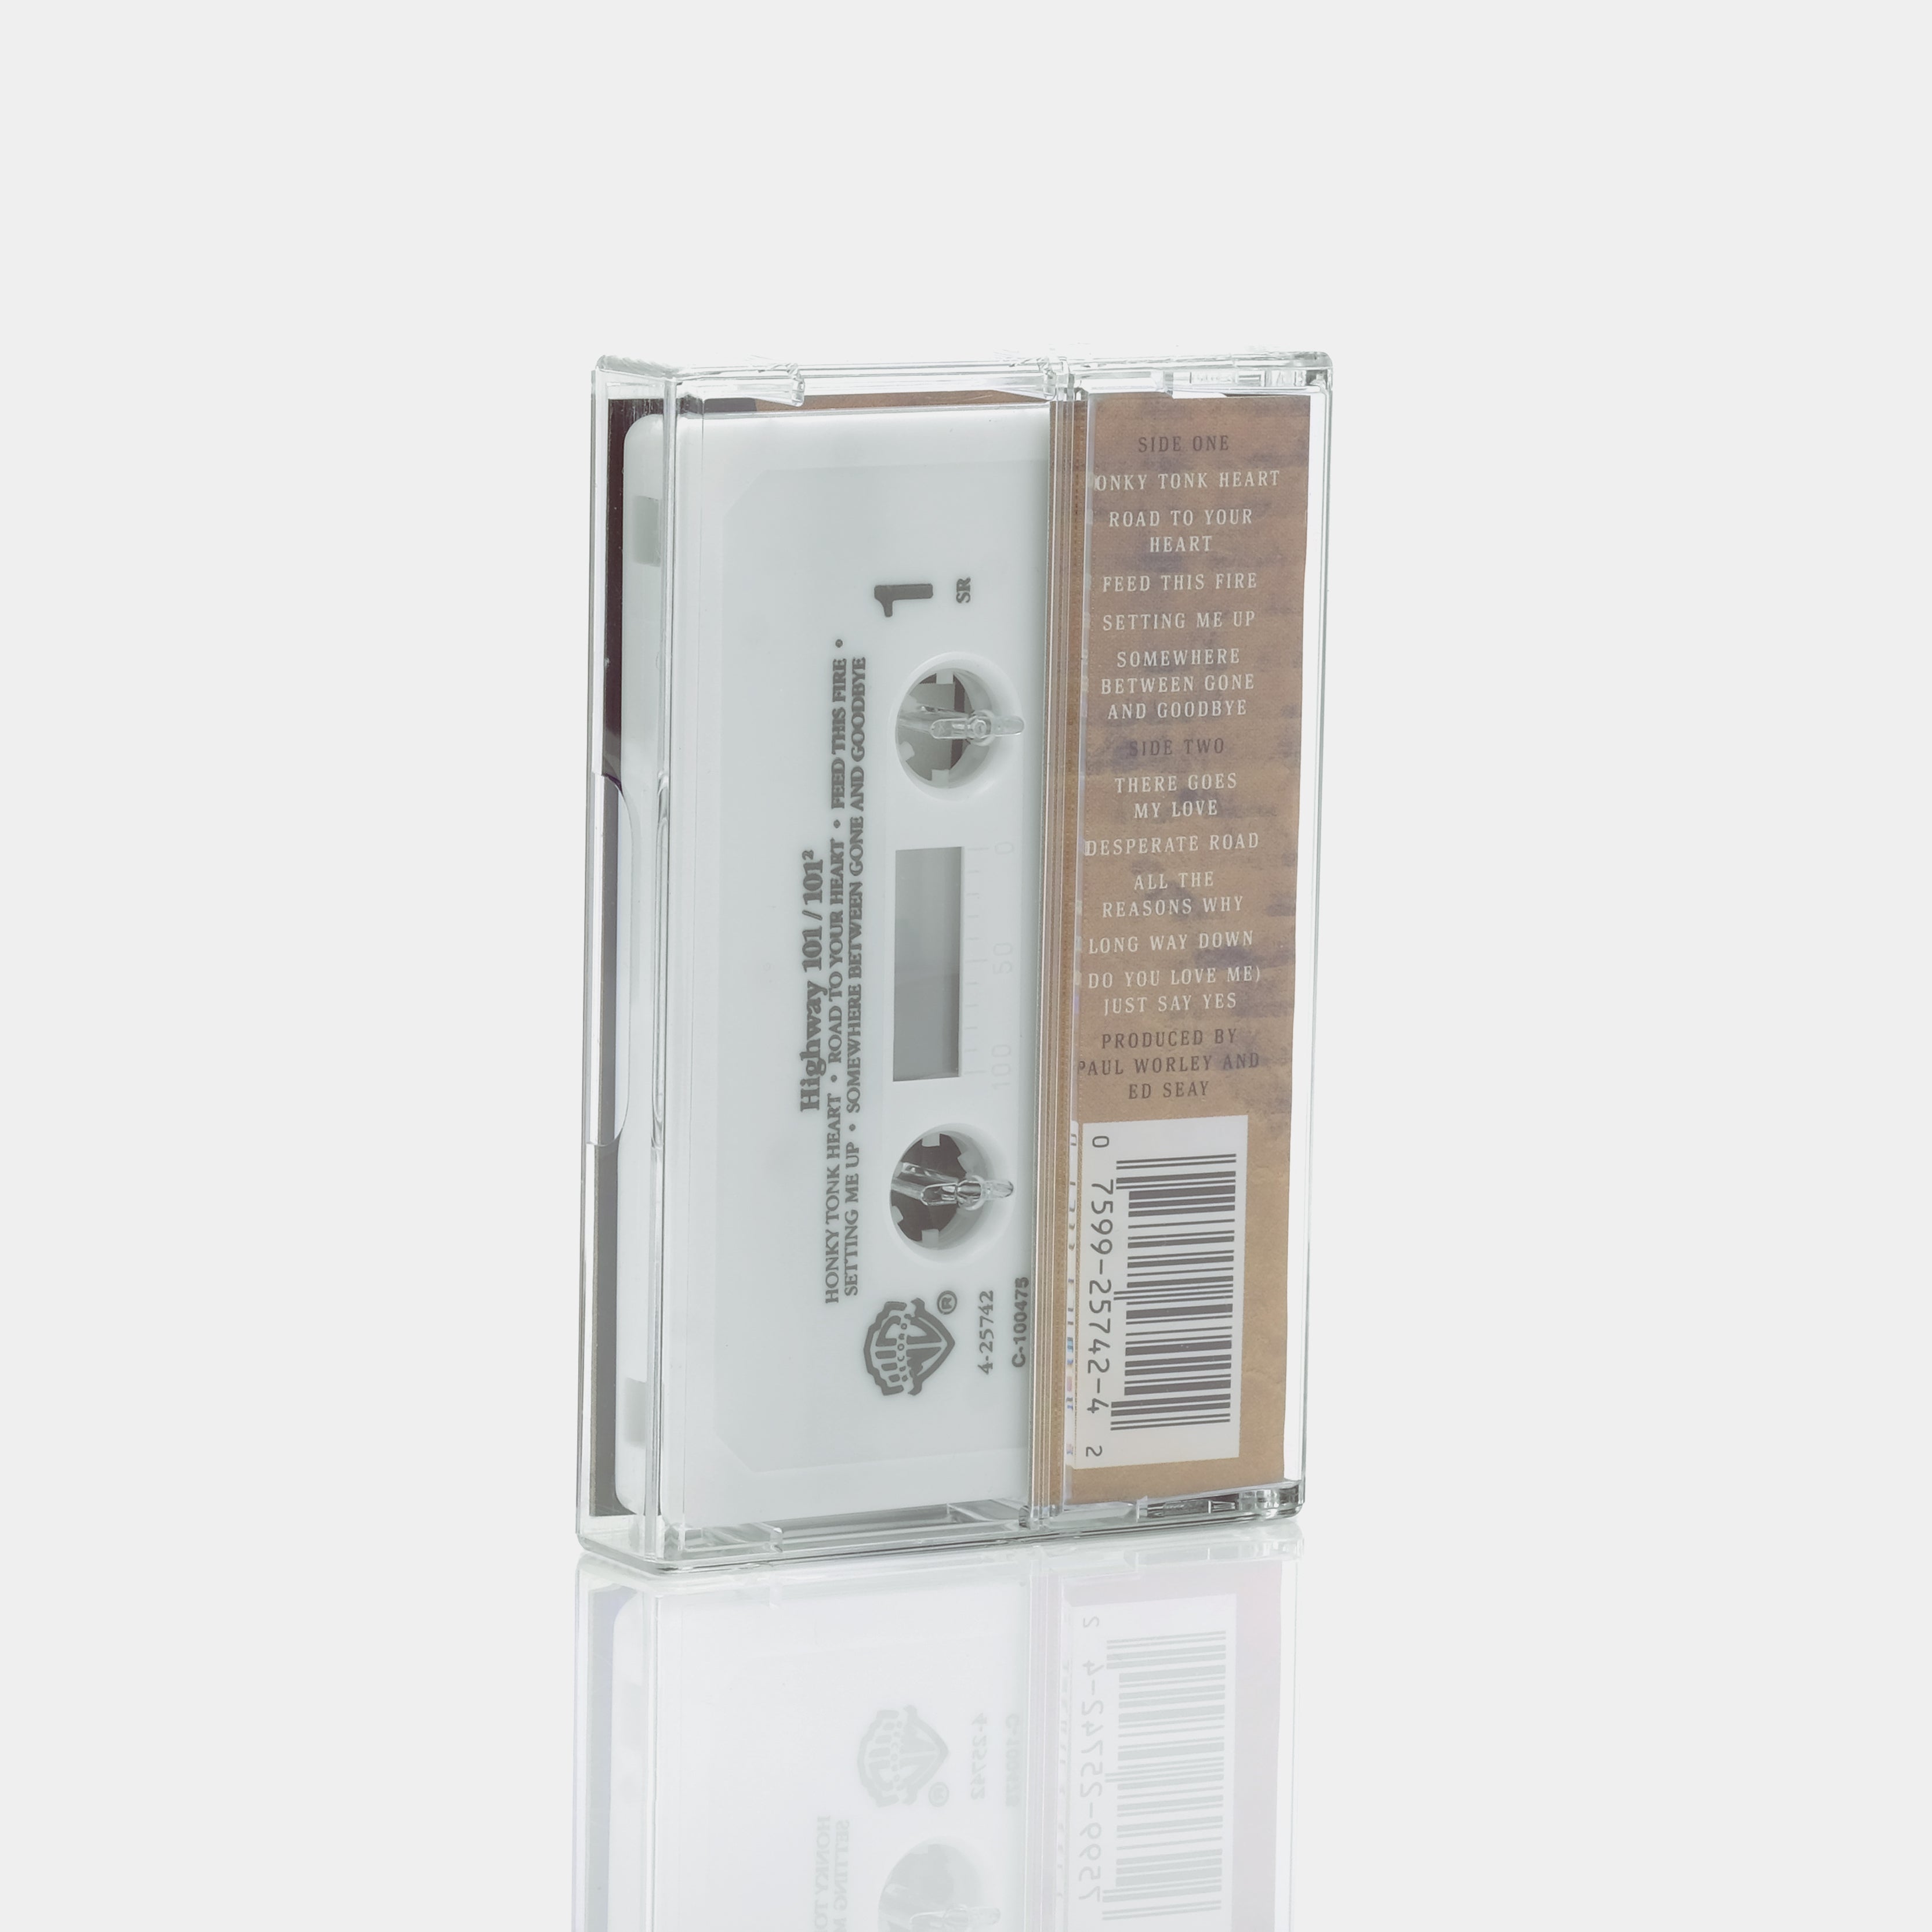 Highway 101 - Highway 101² Cassette Tape